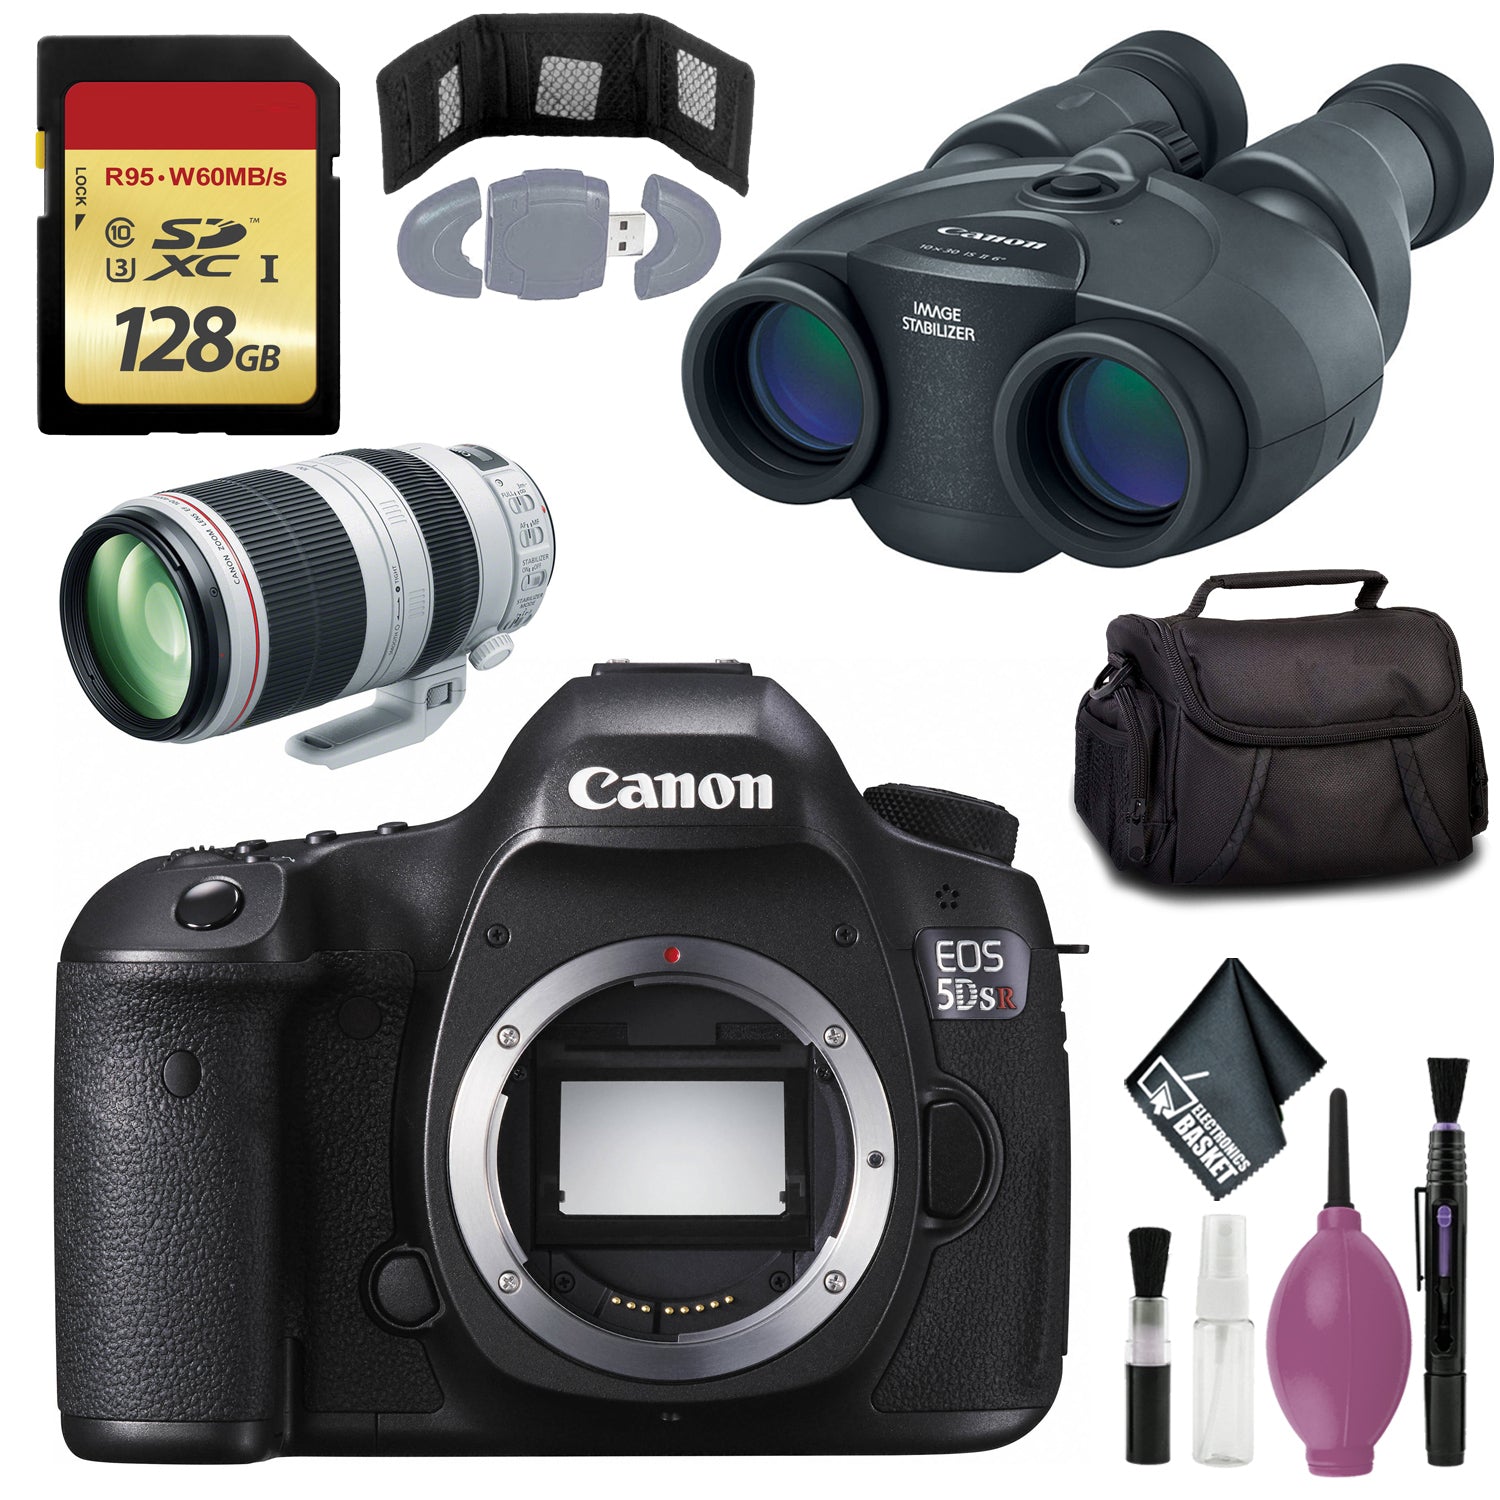 Canon 10x30 IS II Image Stabilized Binocular - Canon????EOS 5DS R DSLR Camera - 128GB Card - EF 100-400MM F/4.5-5.6L IS II USM LENS